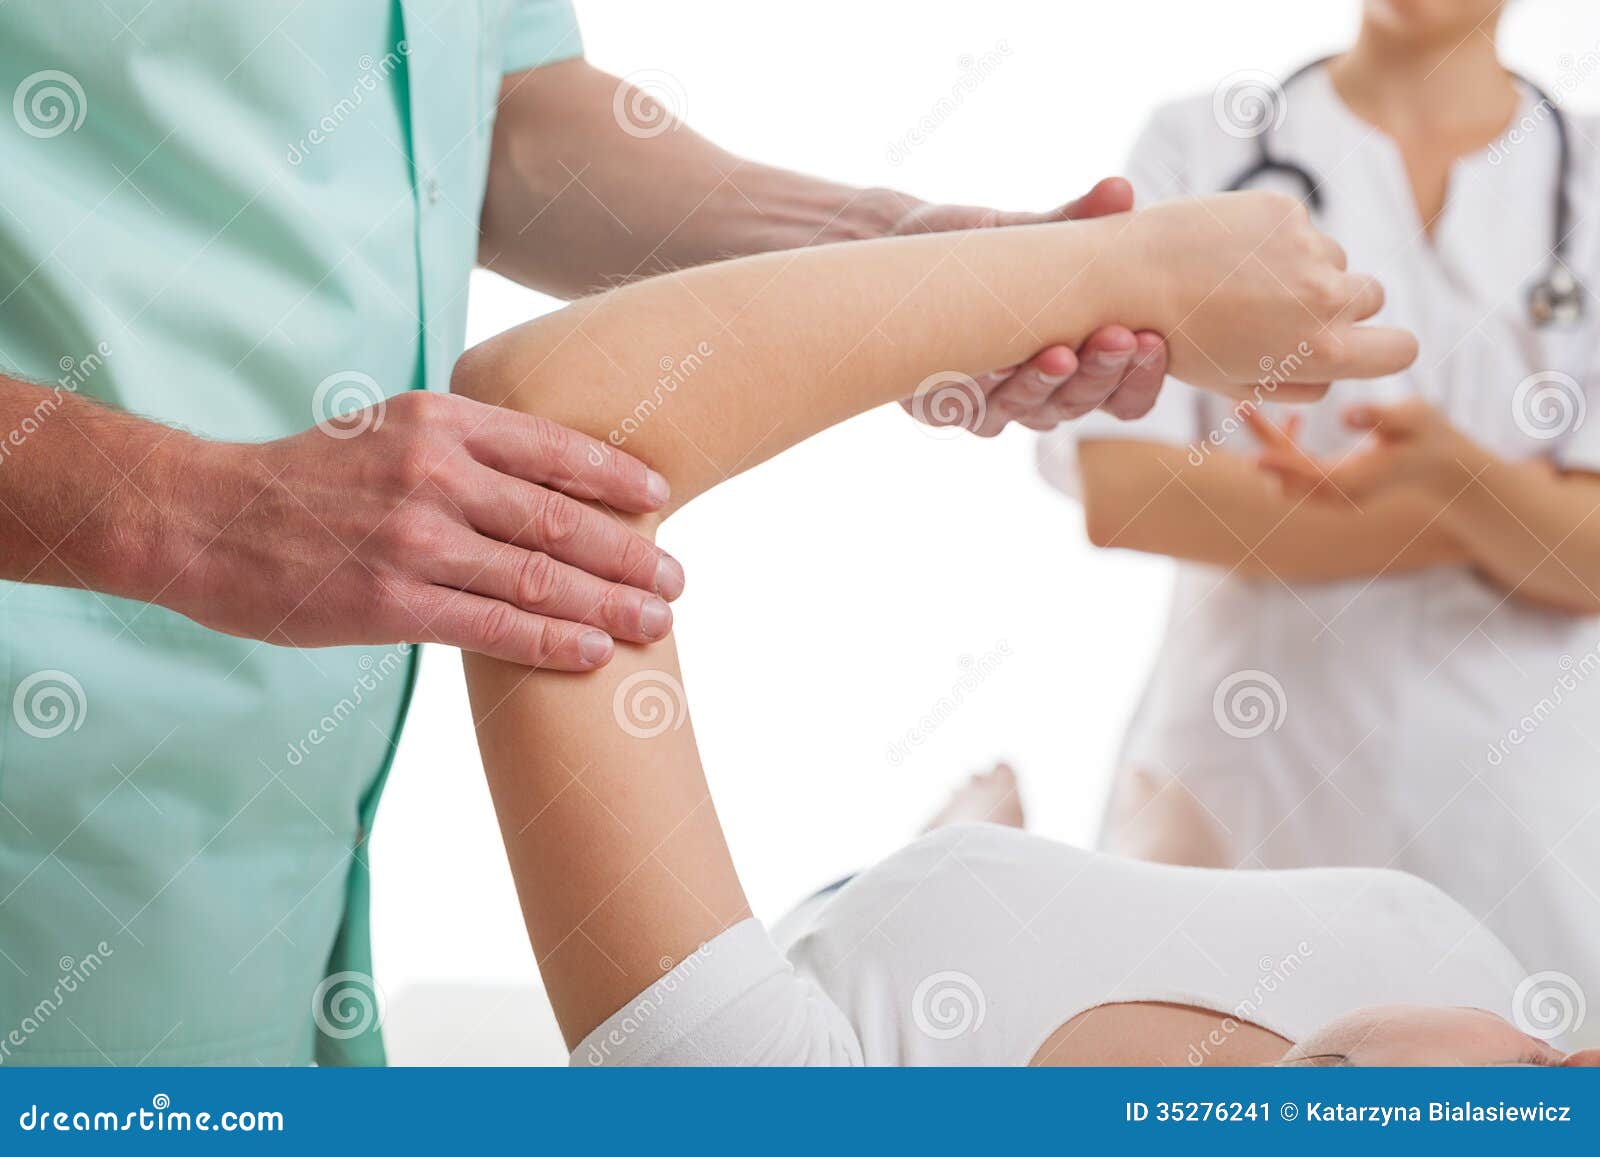 doctors examining injured arm